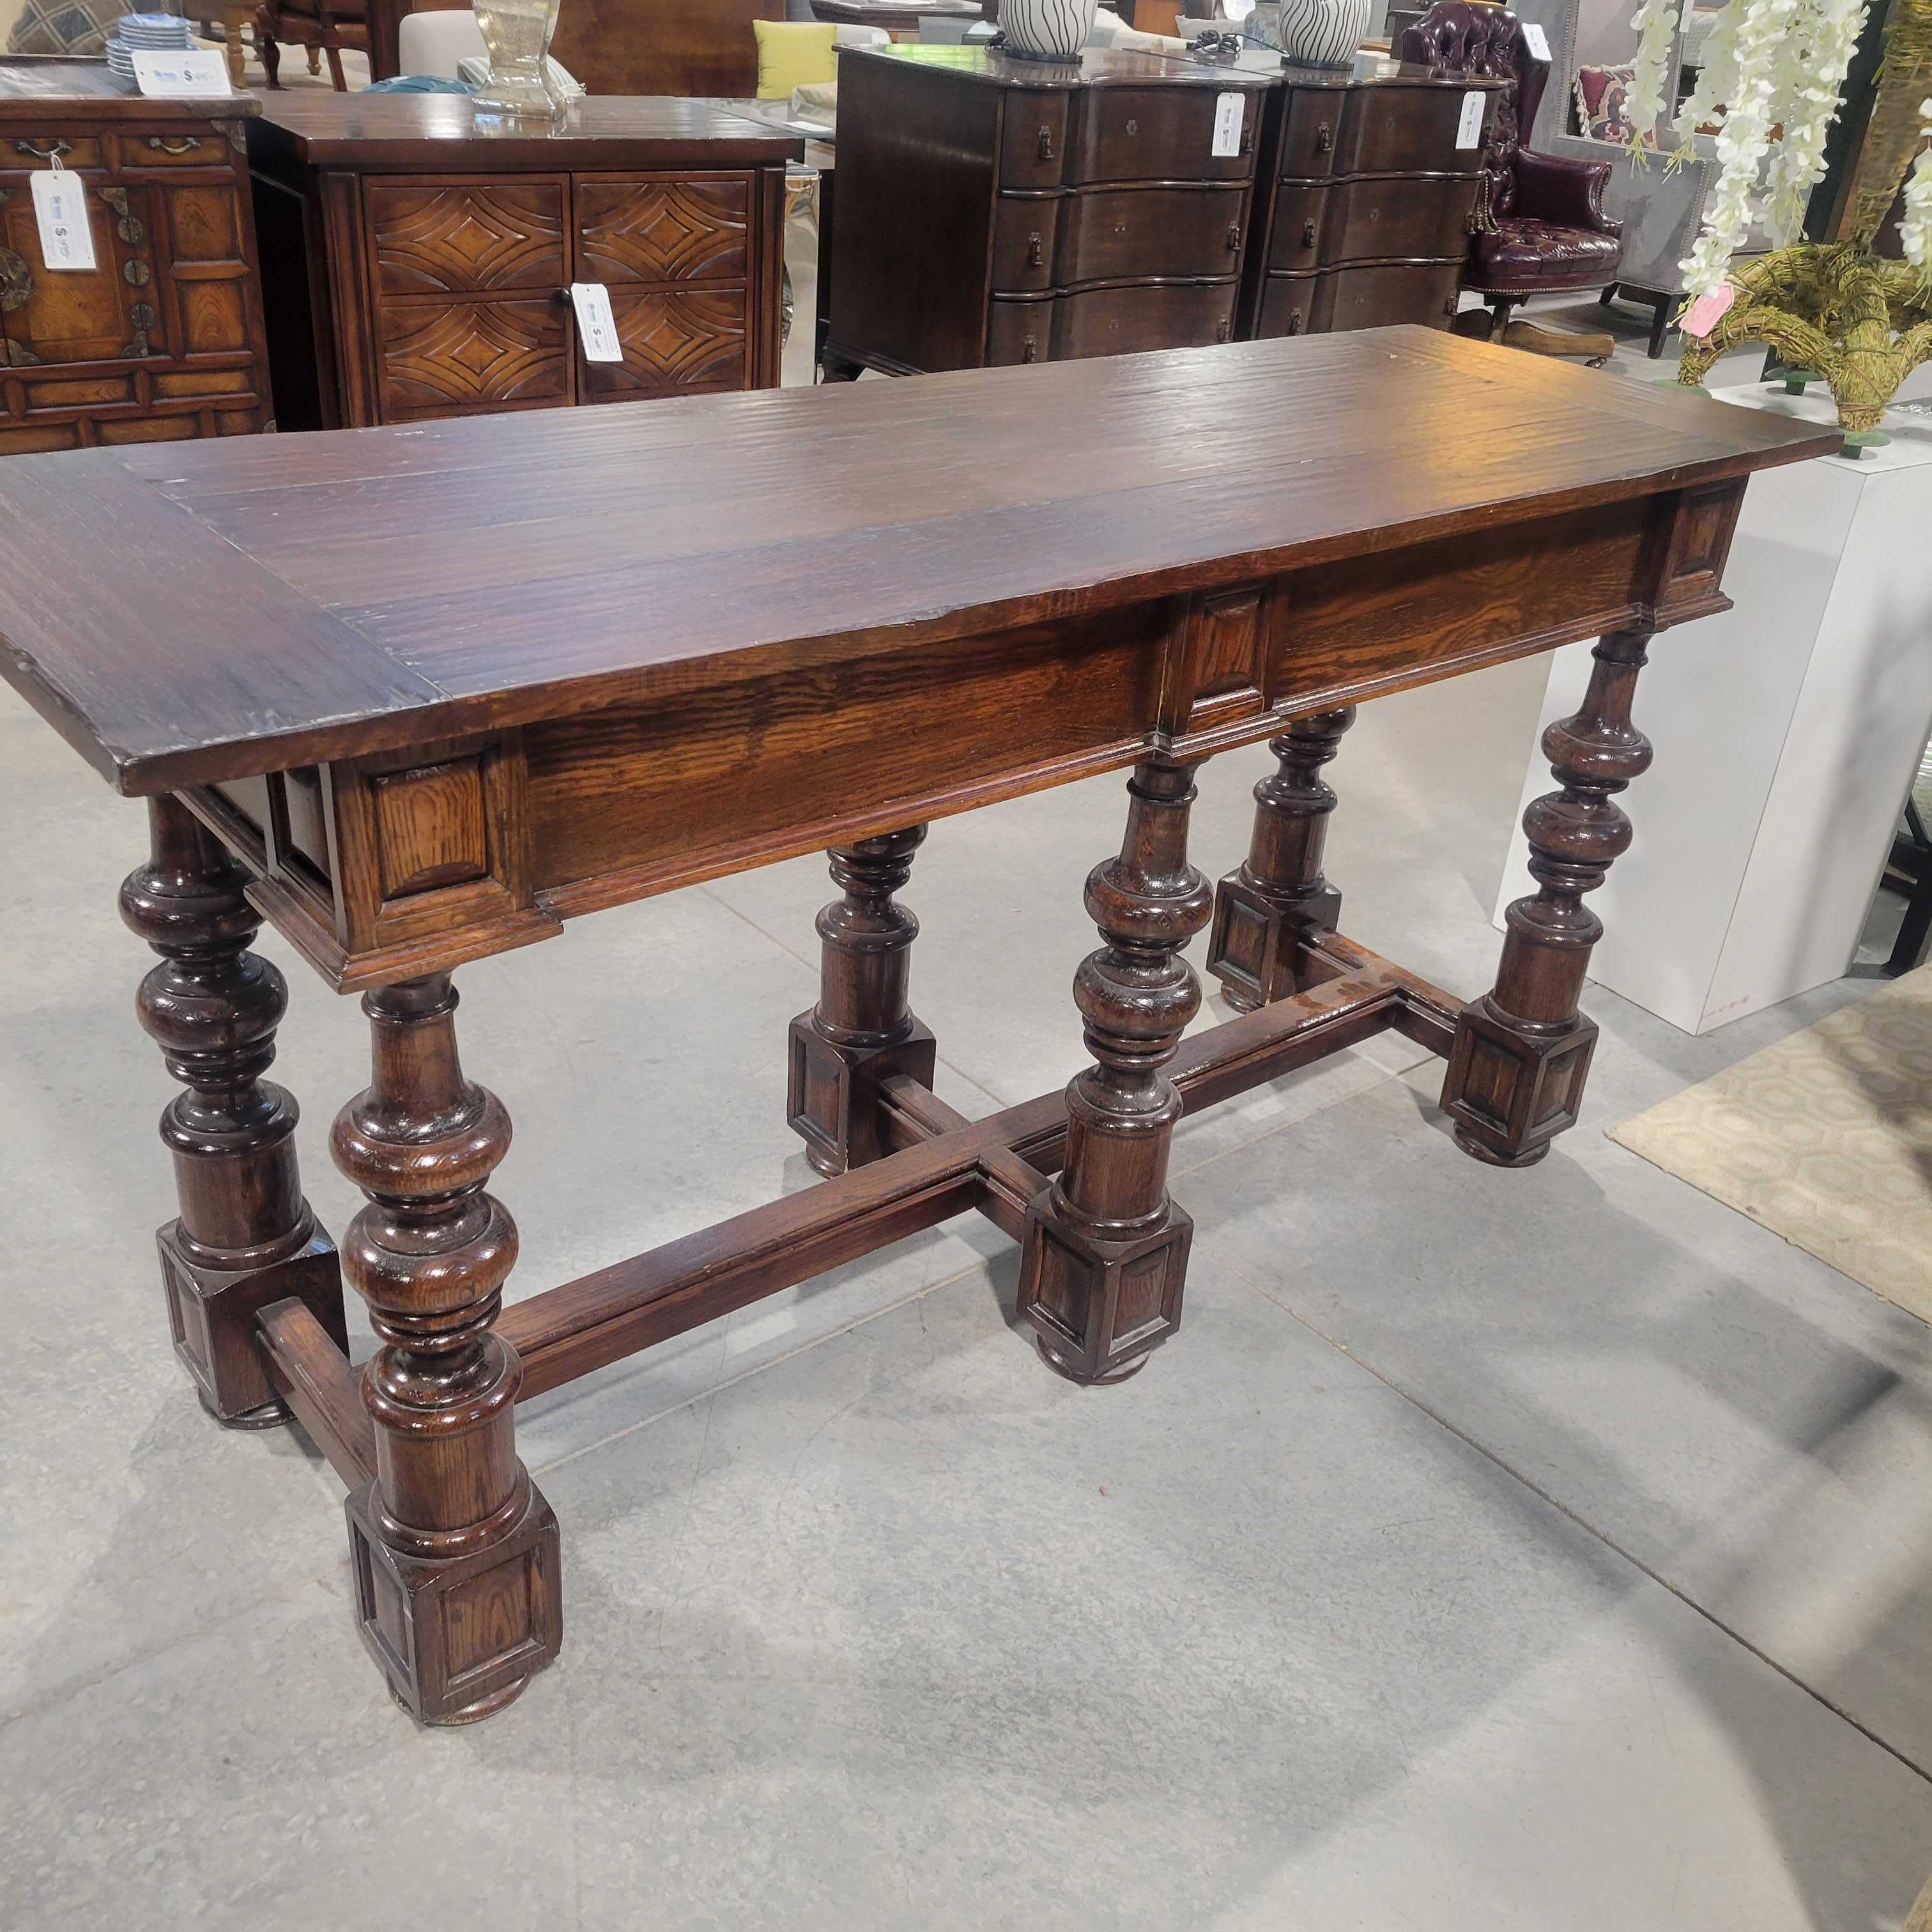 72"x 24"x 36" Carved Wood Ornate Leg & Trestle 2 Drawer Sofa Table